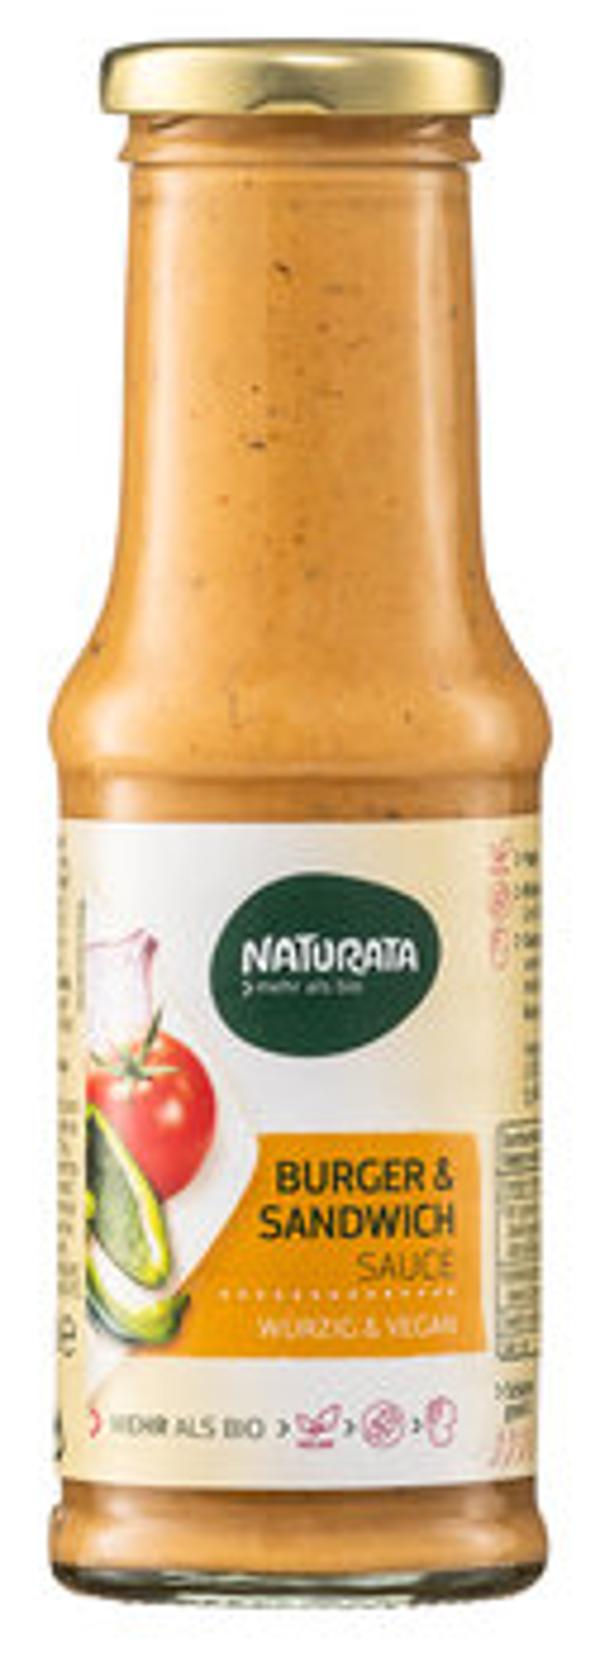 Produktfoto zu Naturata Burger Sandwich Sauce 210ml